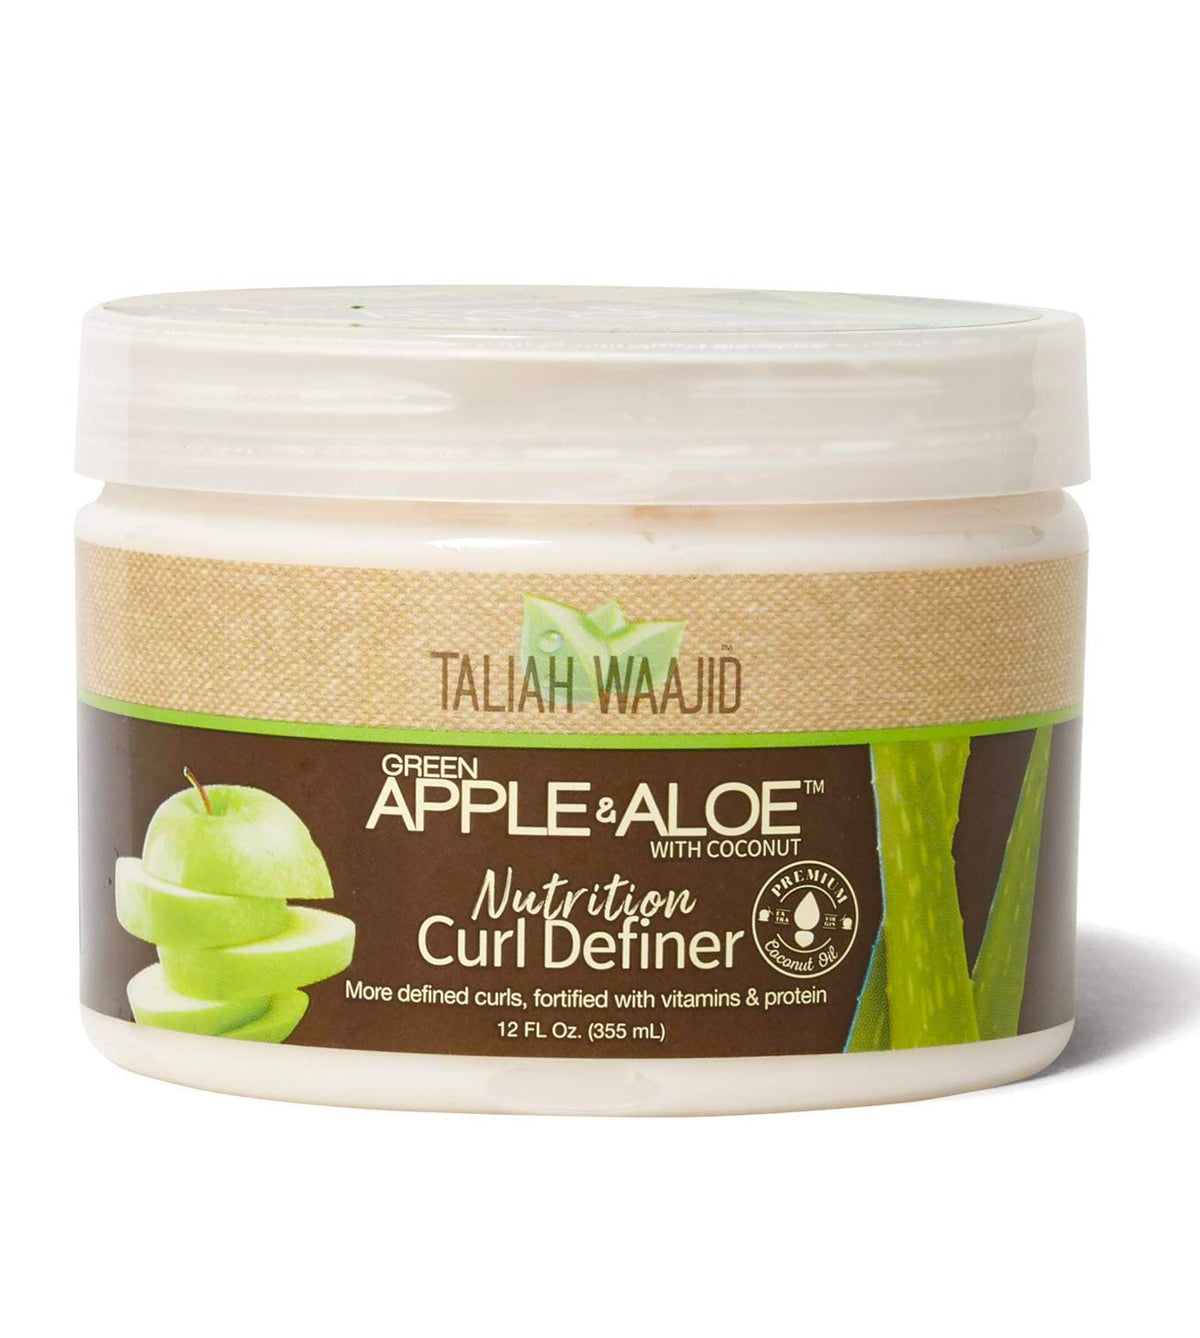 Taliah Waajid Green Apple & Aloe with Coconut Nutrition Curl Definer - AQ Online